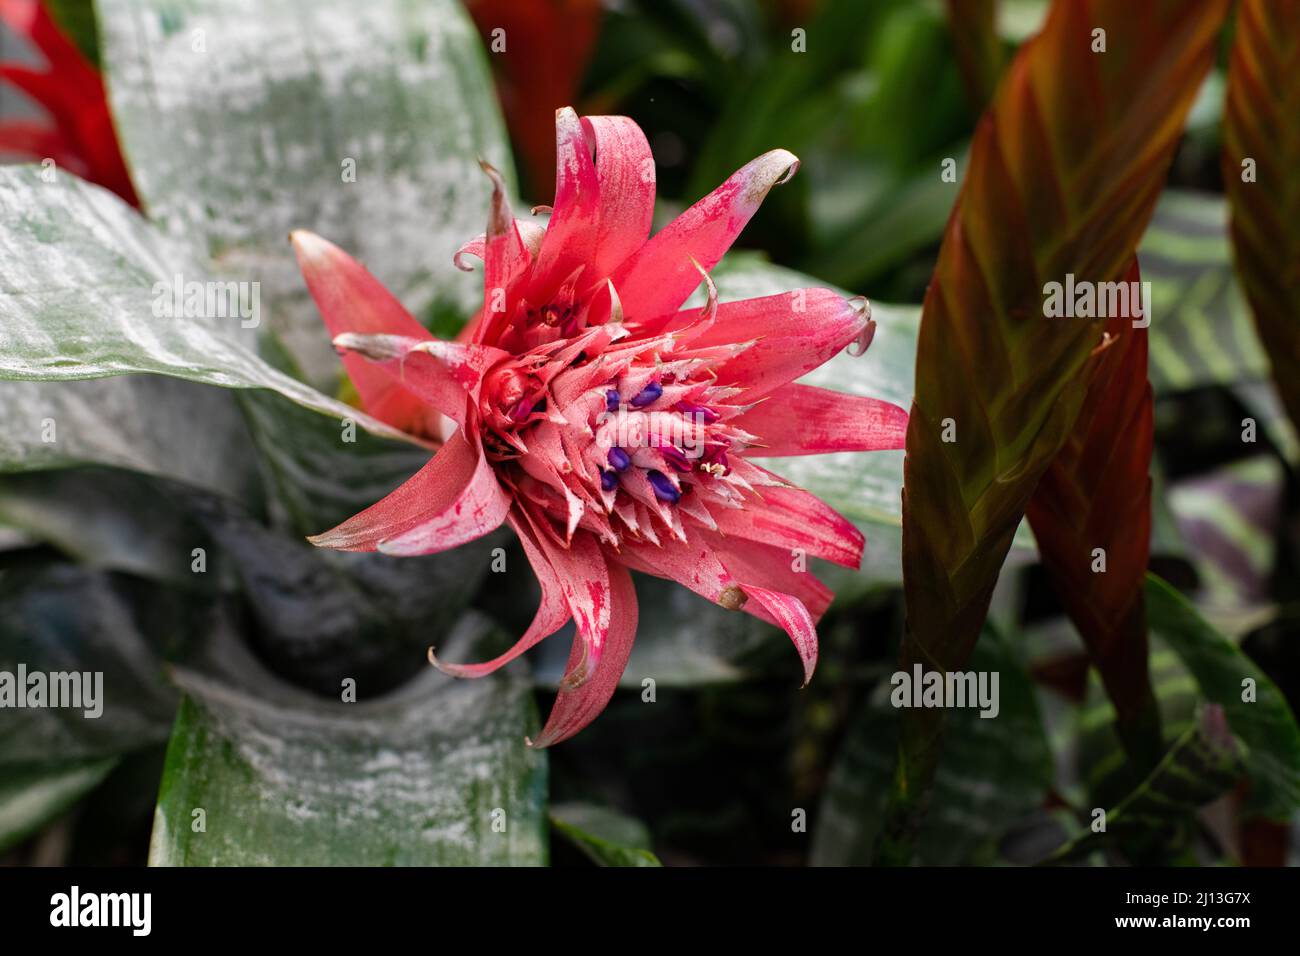 Aechmea blossom close-up. Ornamental plant Echmea of the bromeliad family close-up Stock Photo